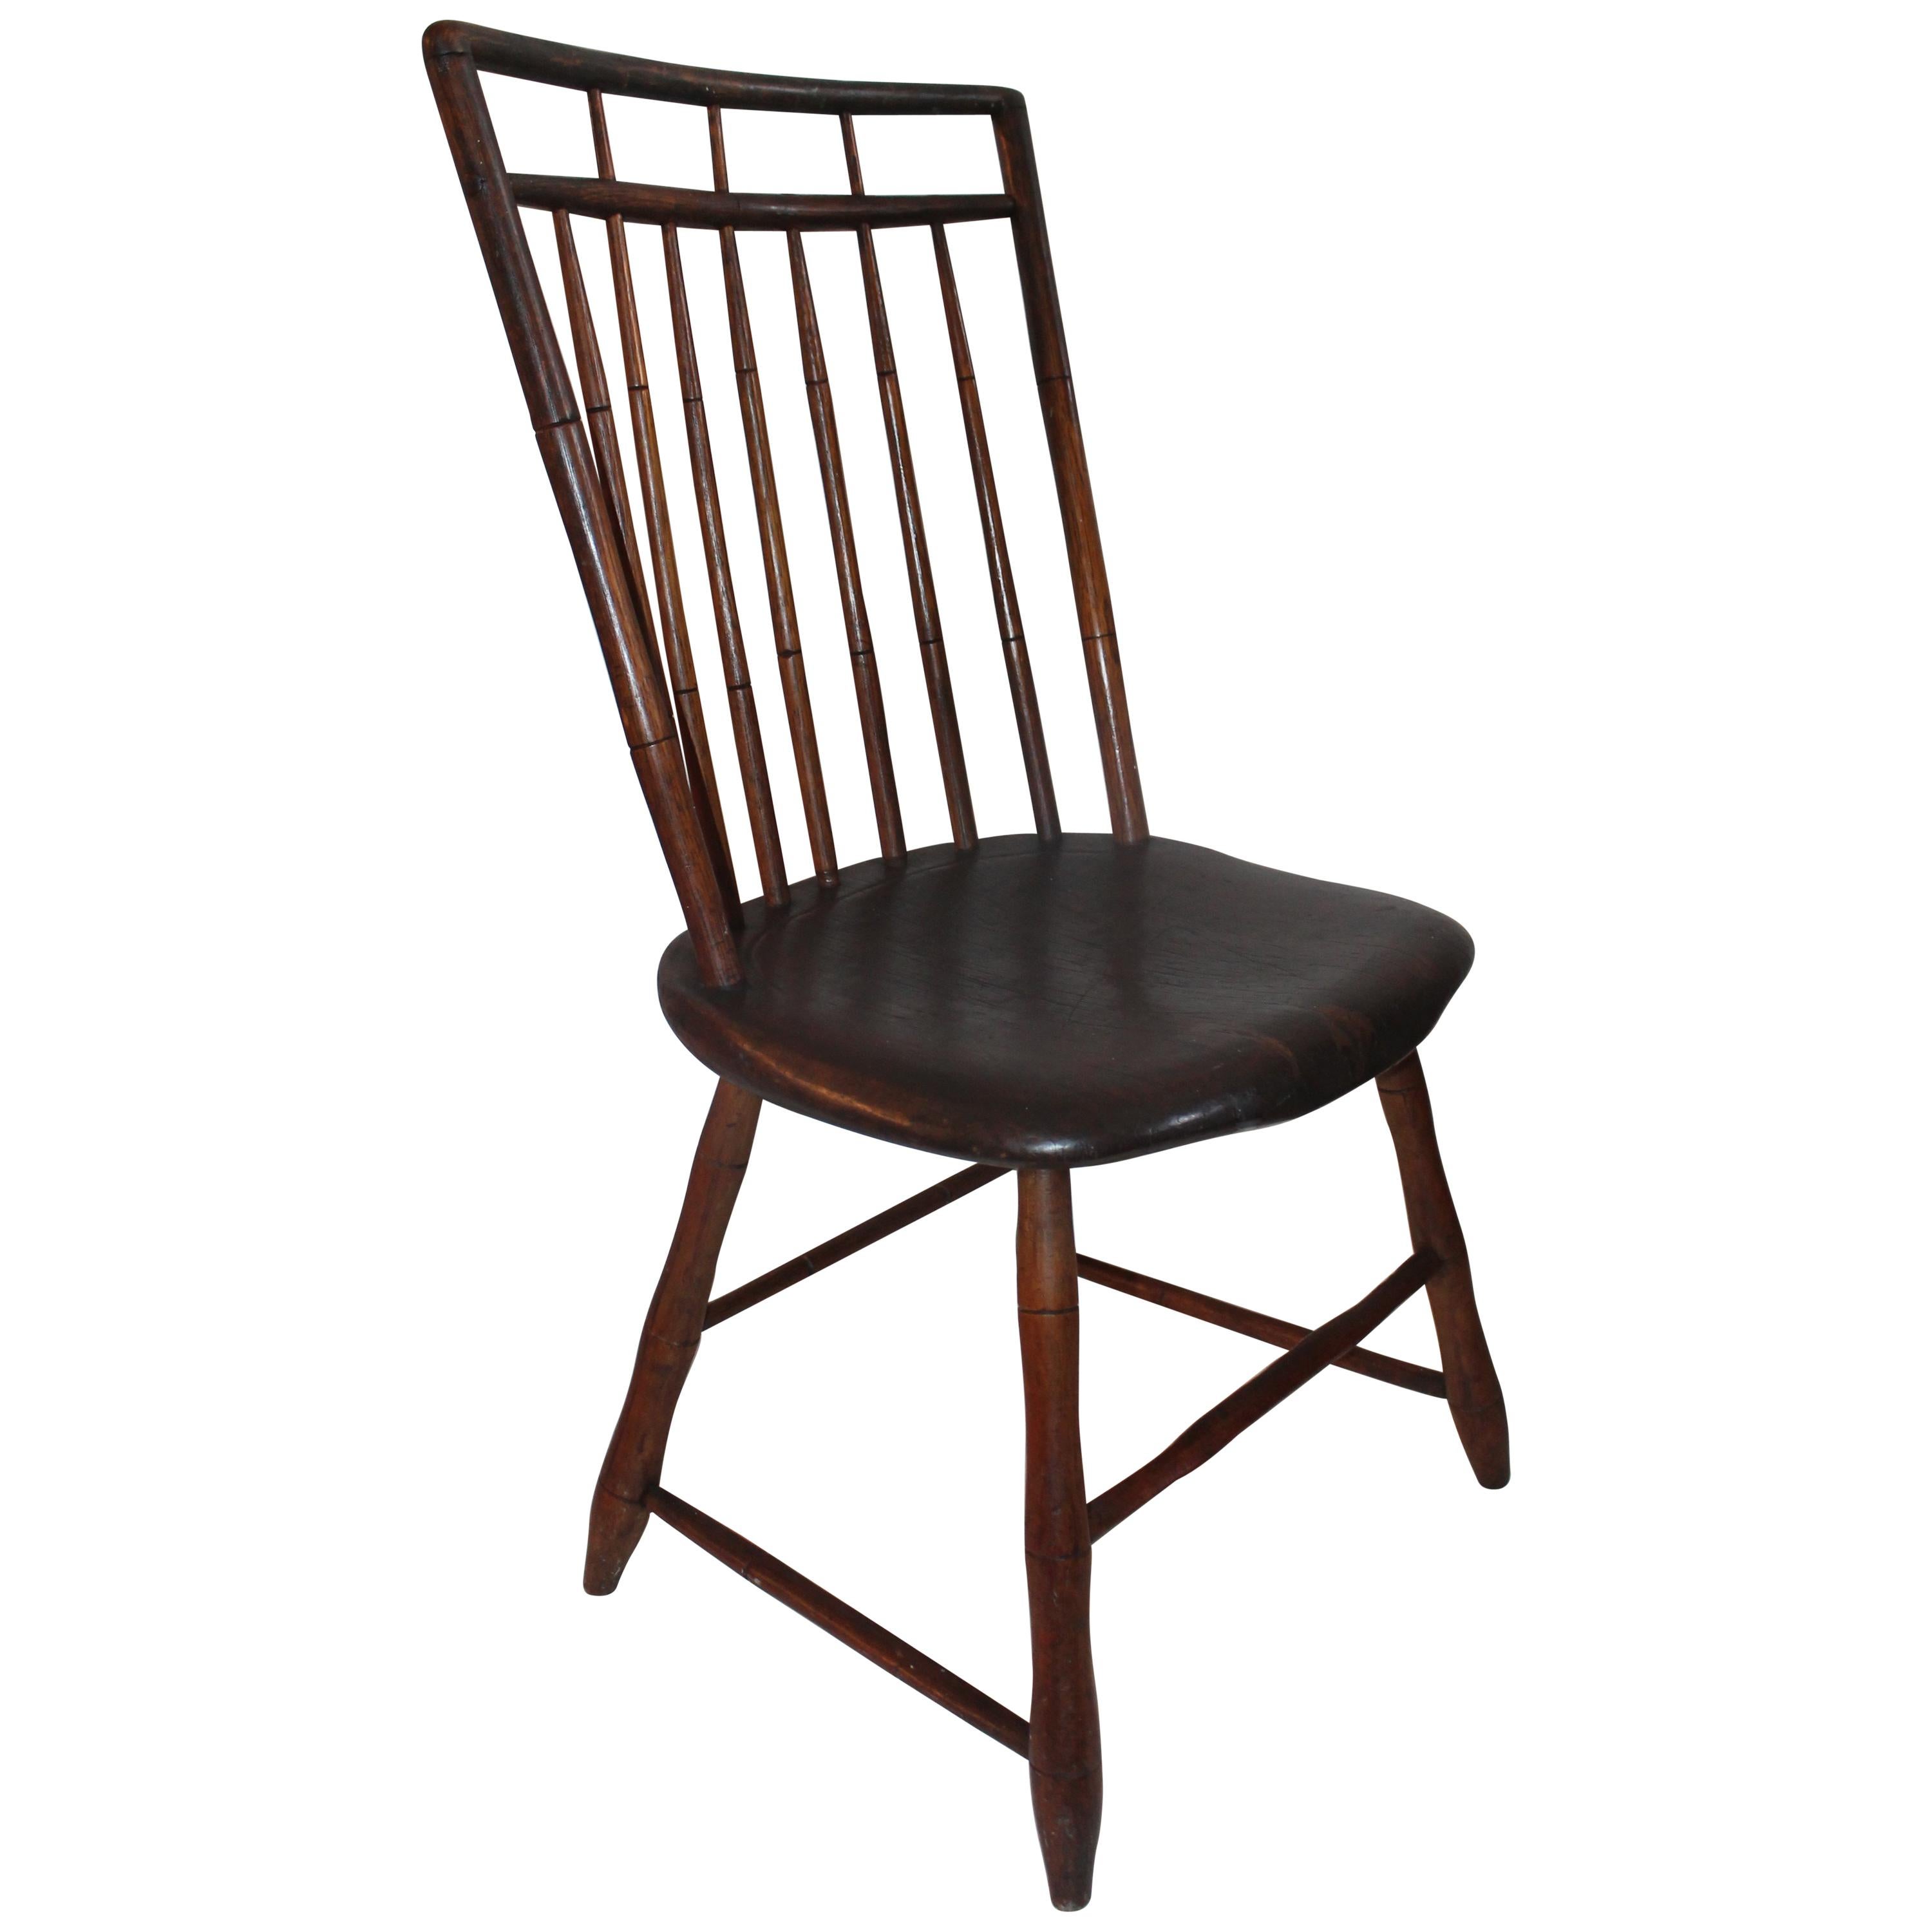 19th Century Bird Cage Windsor Chair from Pennsylvania